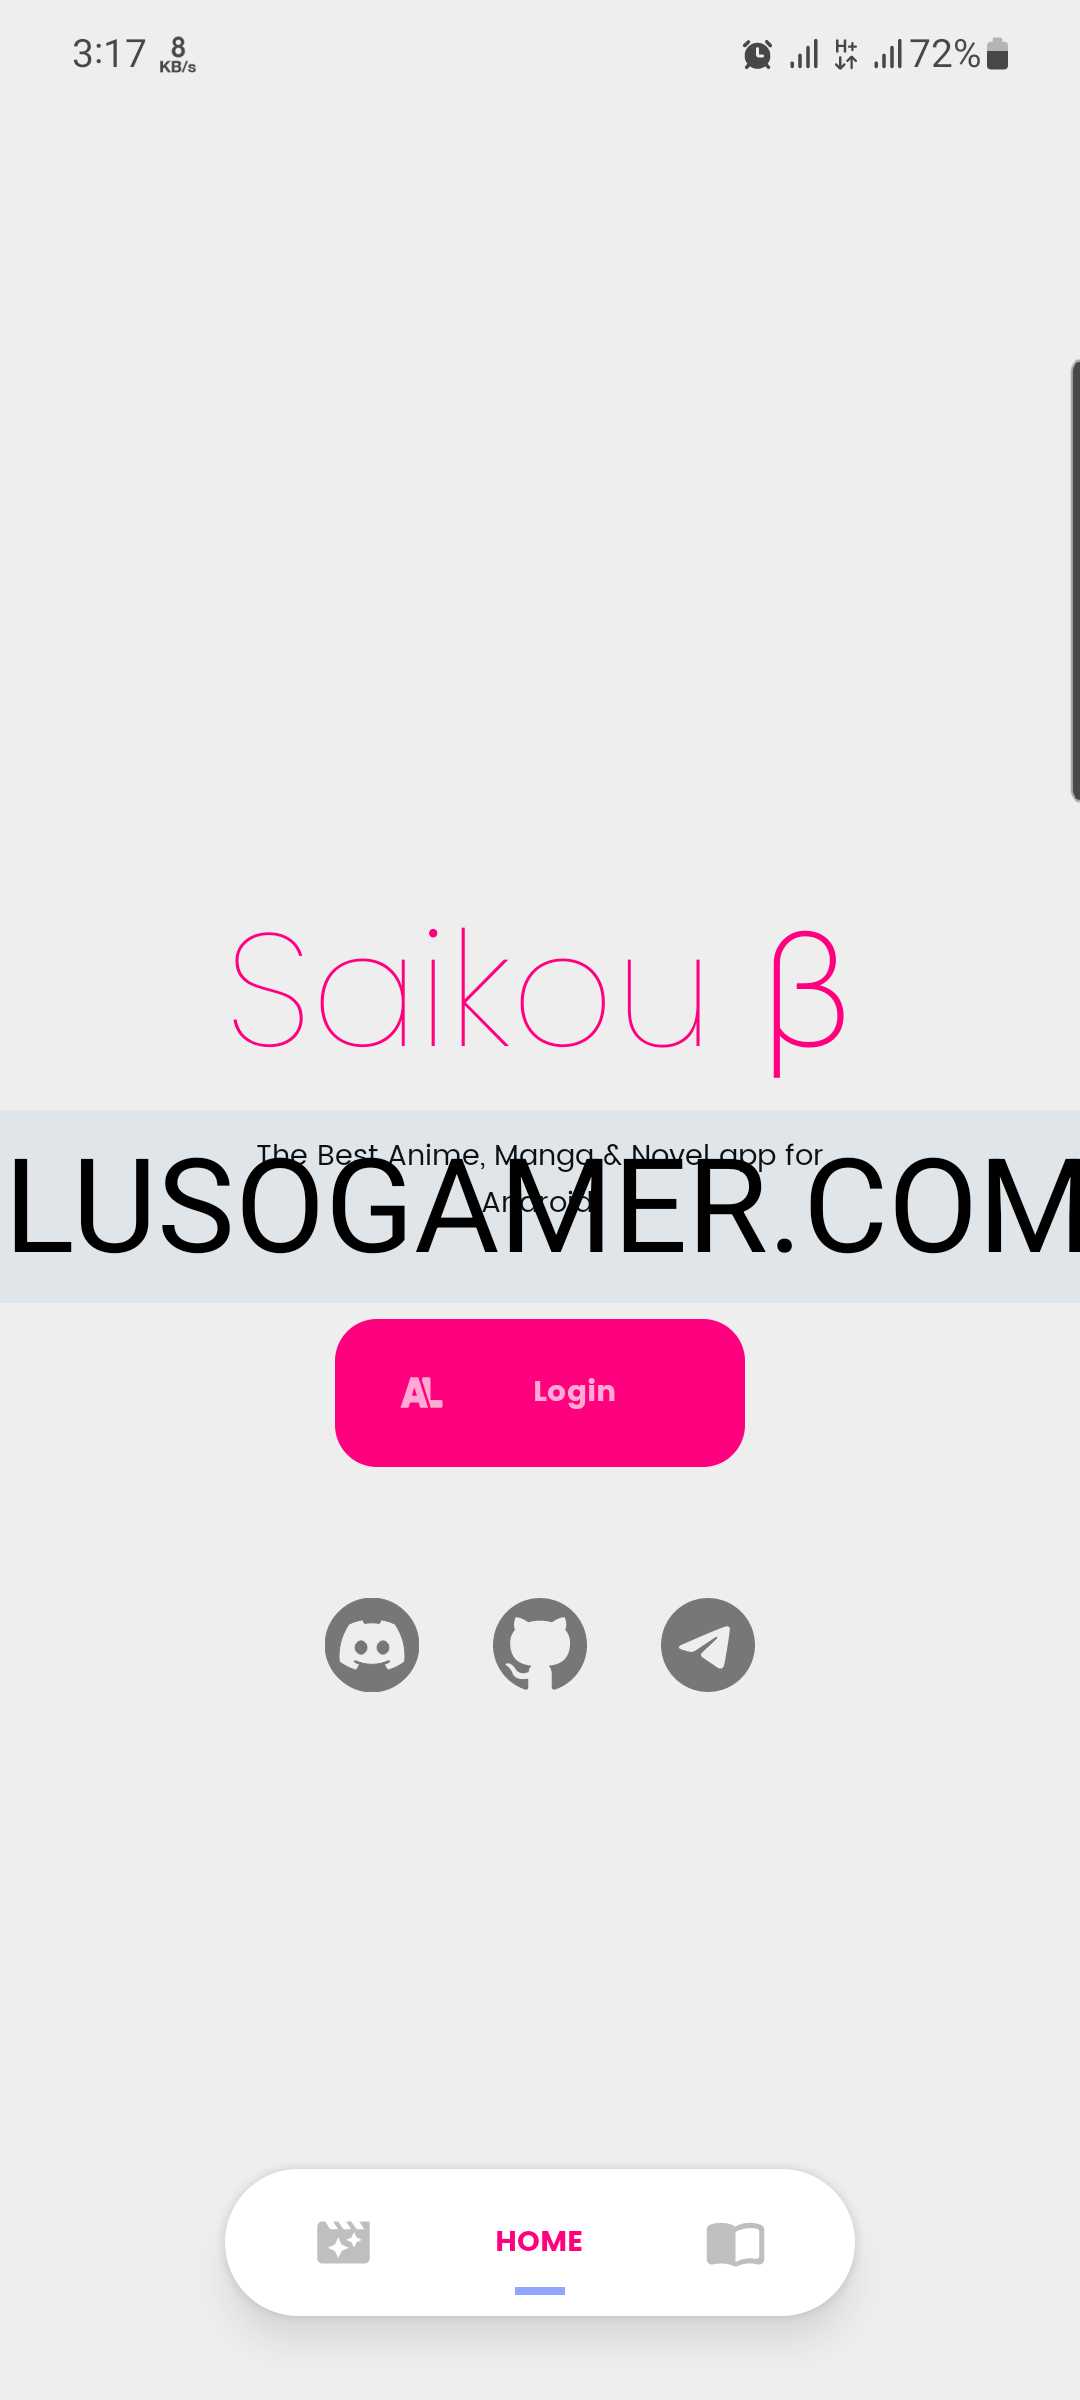 Saikou APK Download for Android Free